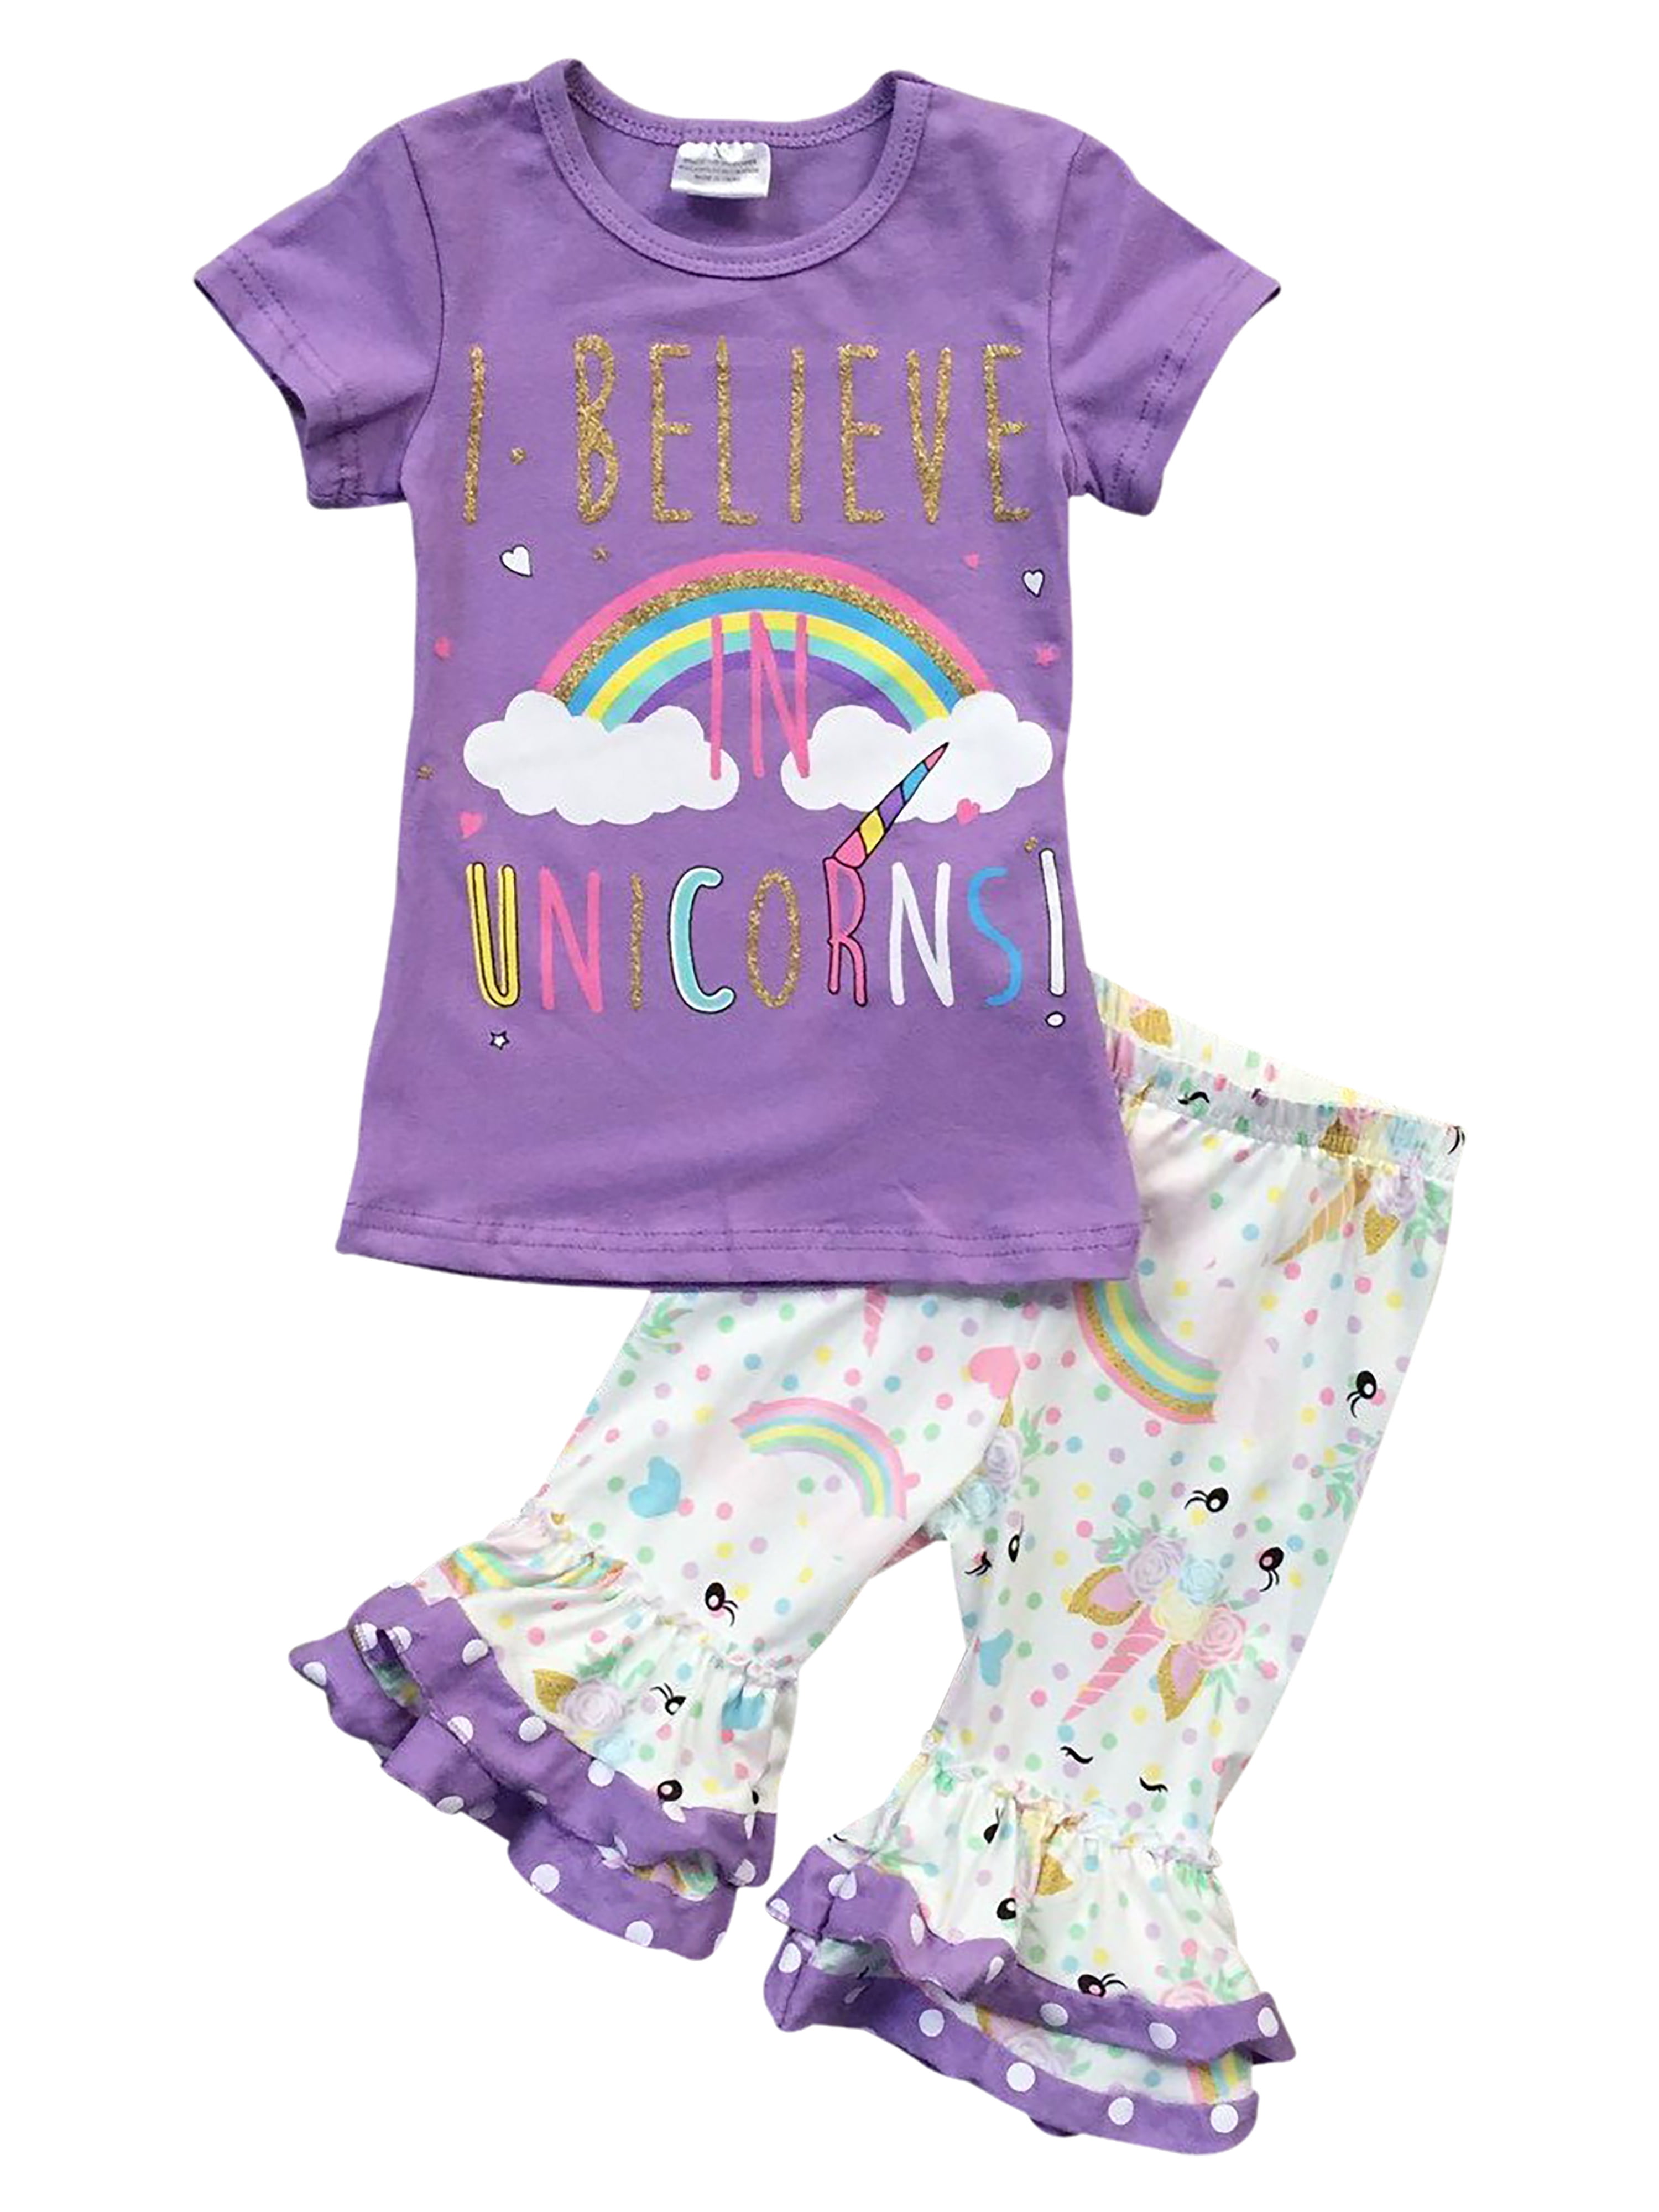 7, Unicorn Apple Slice Cute Girls Boutique Clothing Set Unicorn Apple Slice Toddler & Girls Back to School Ruffle Capri Outfit